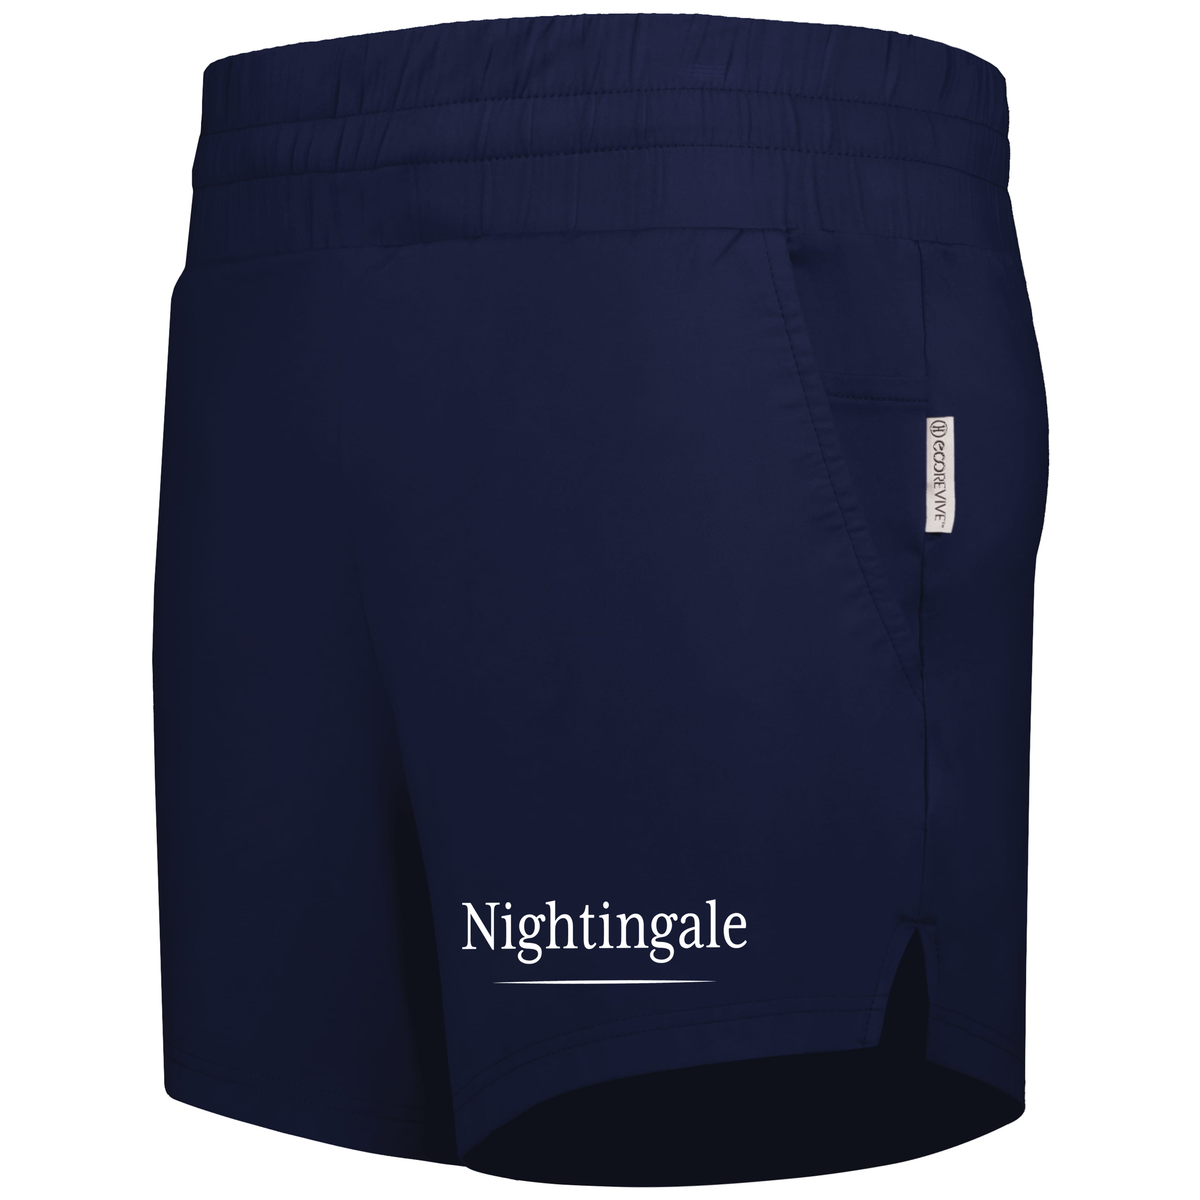 The Nightingale Bamford School Ladies Ventura Soft Knit Shorts